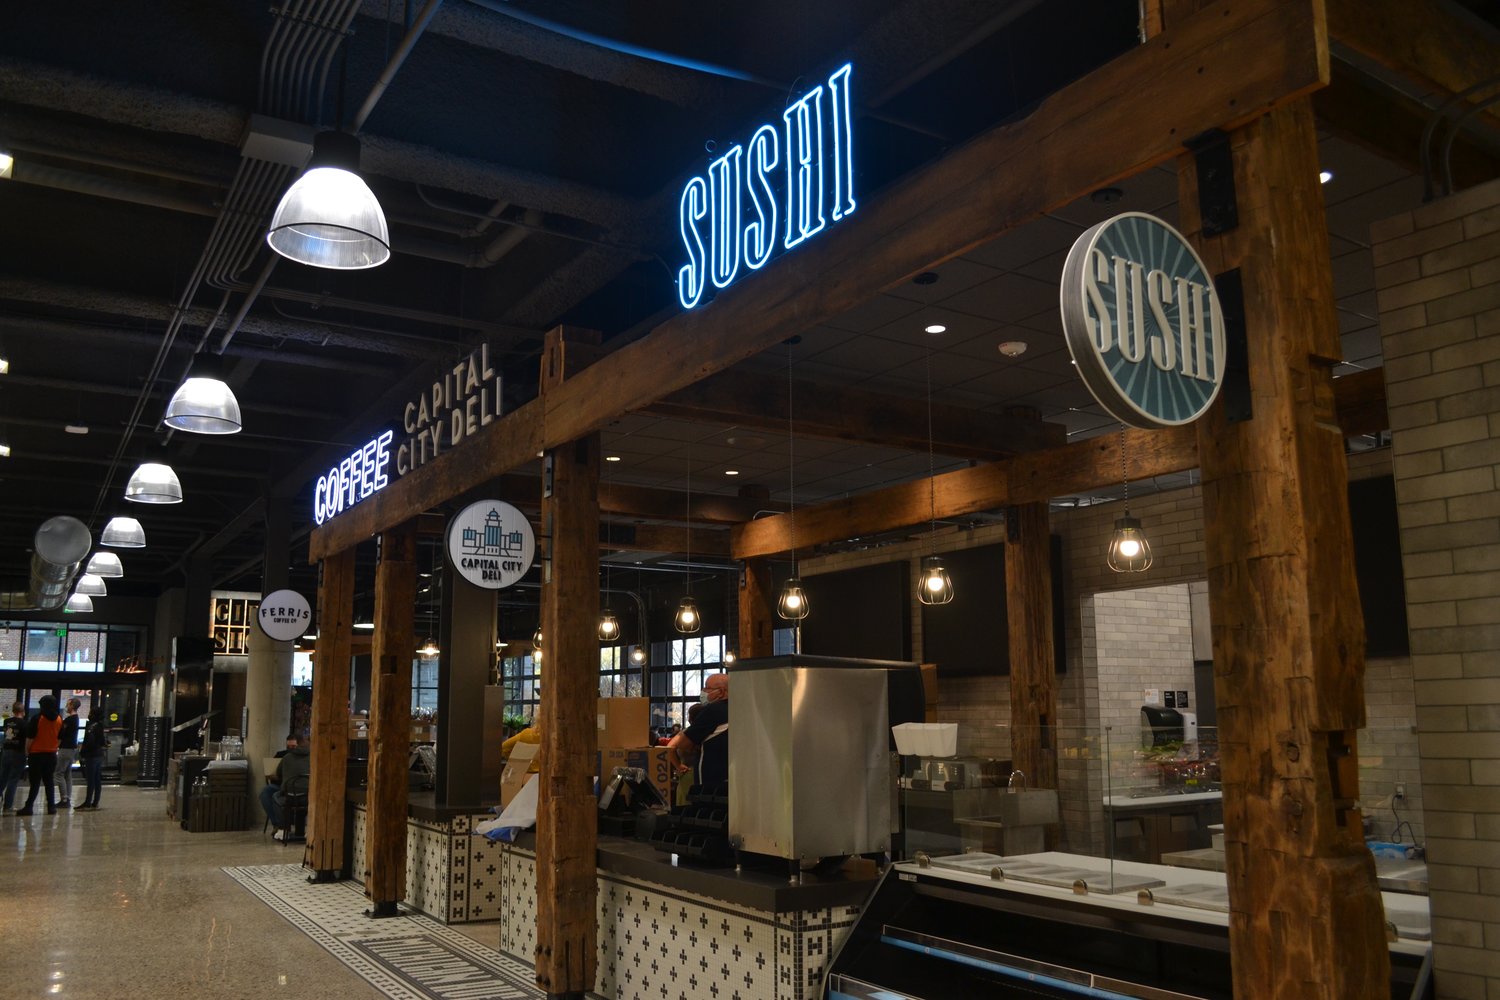 The Capital City Market café includes a sushi bar, deli and a coffee shop.